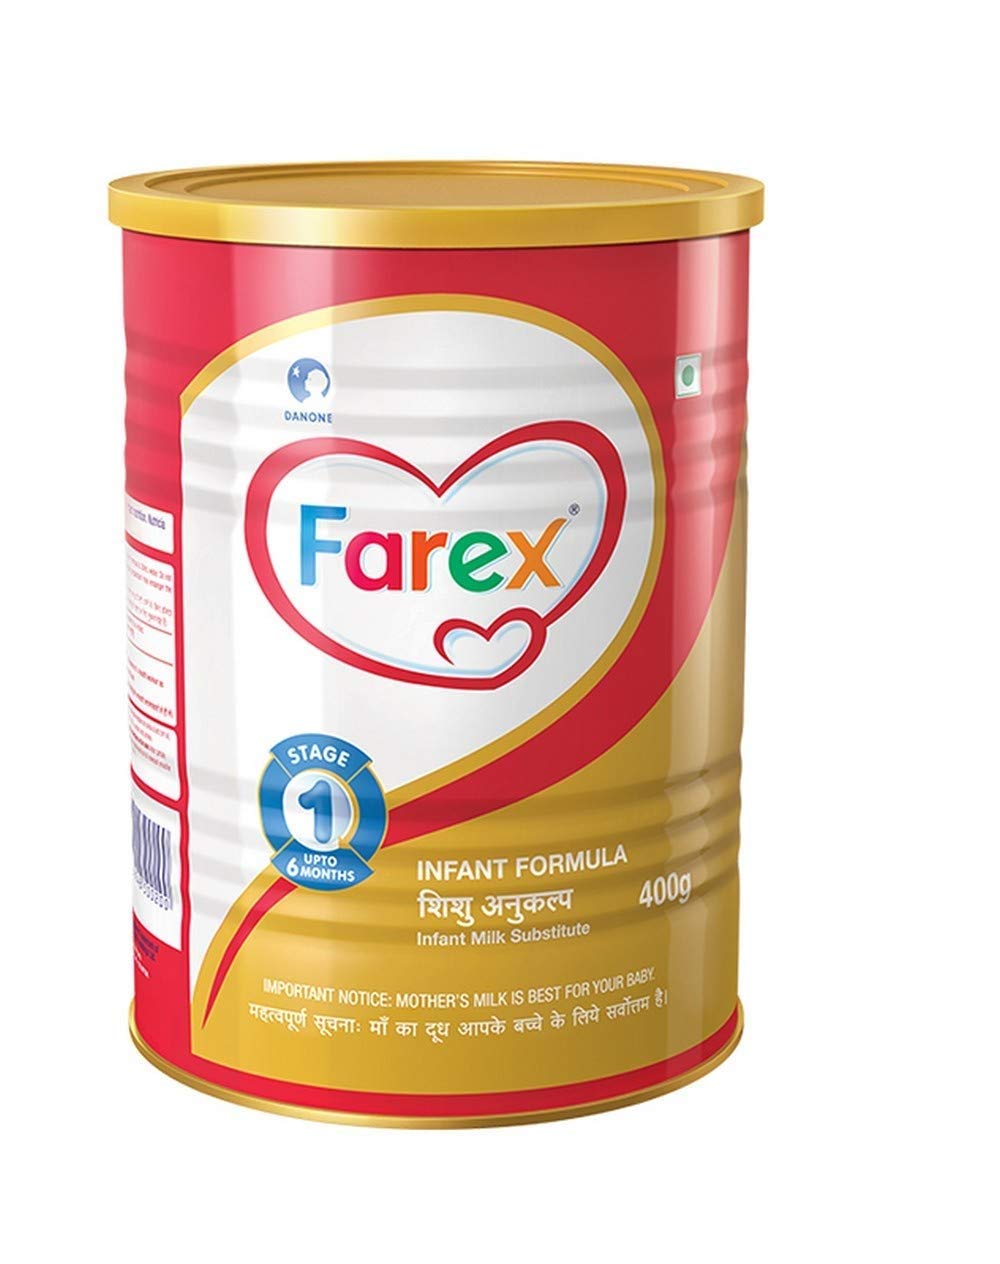 Farex 1 Infant Formula Powder